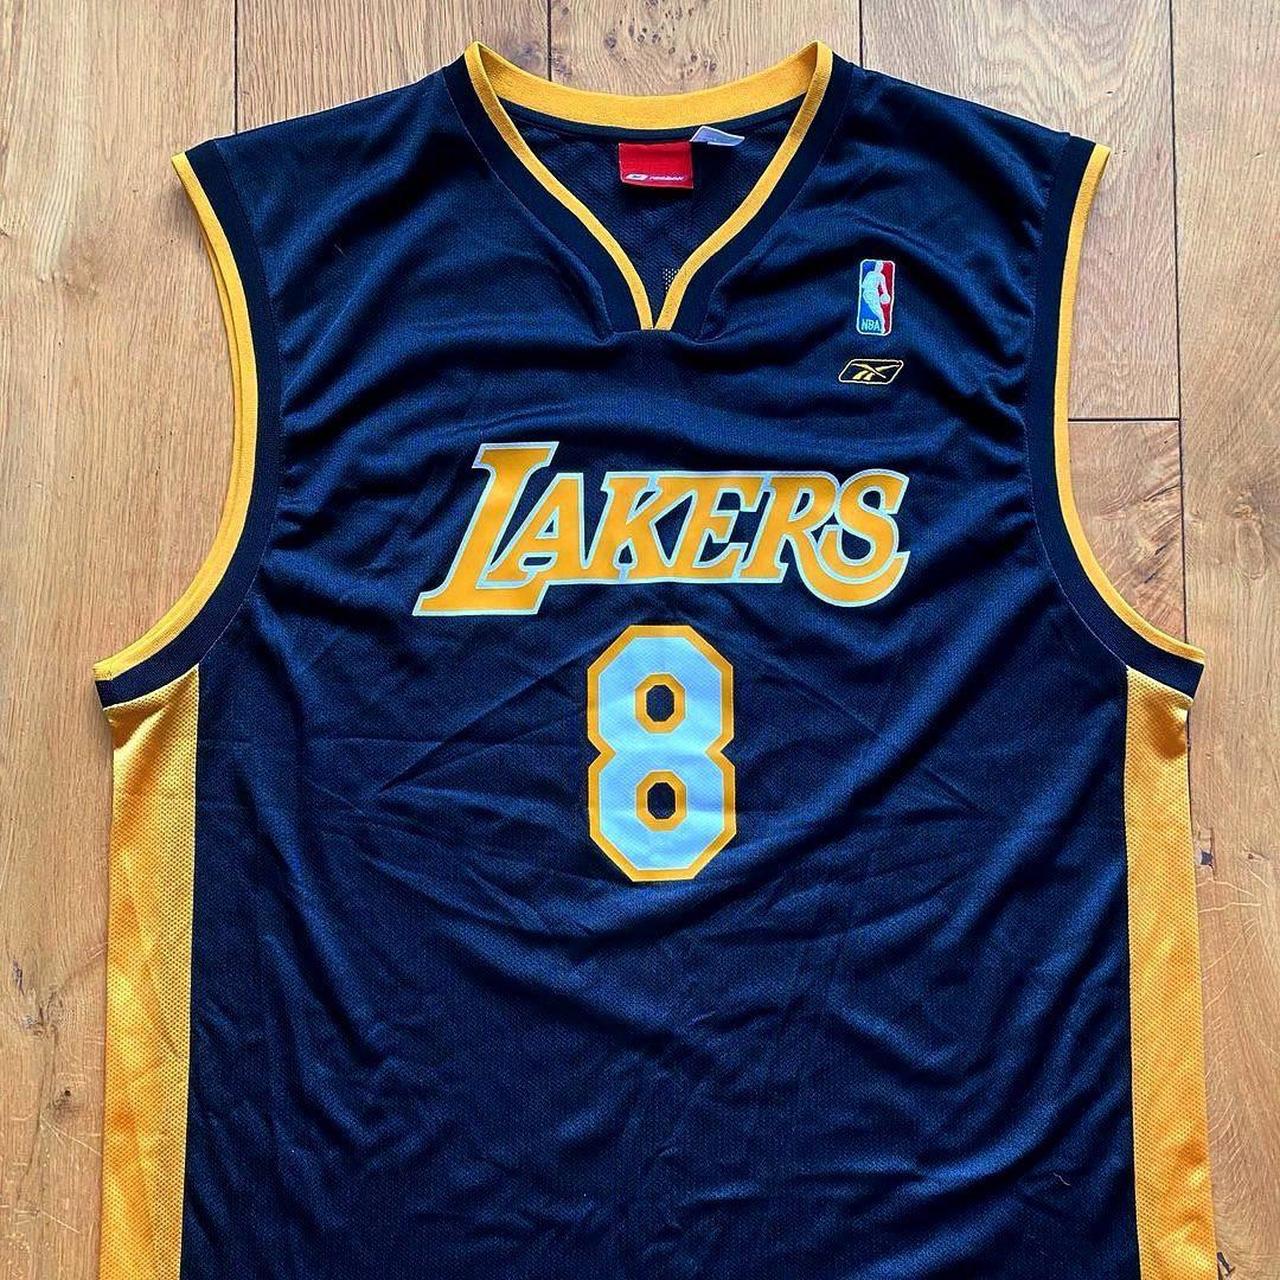 Kobe Bryant number 8 jersey by Nike. Great - Depop